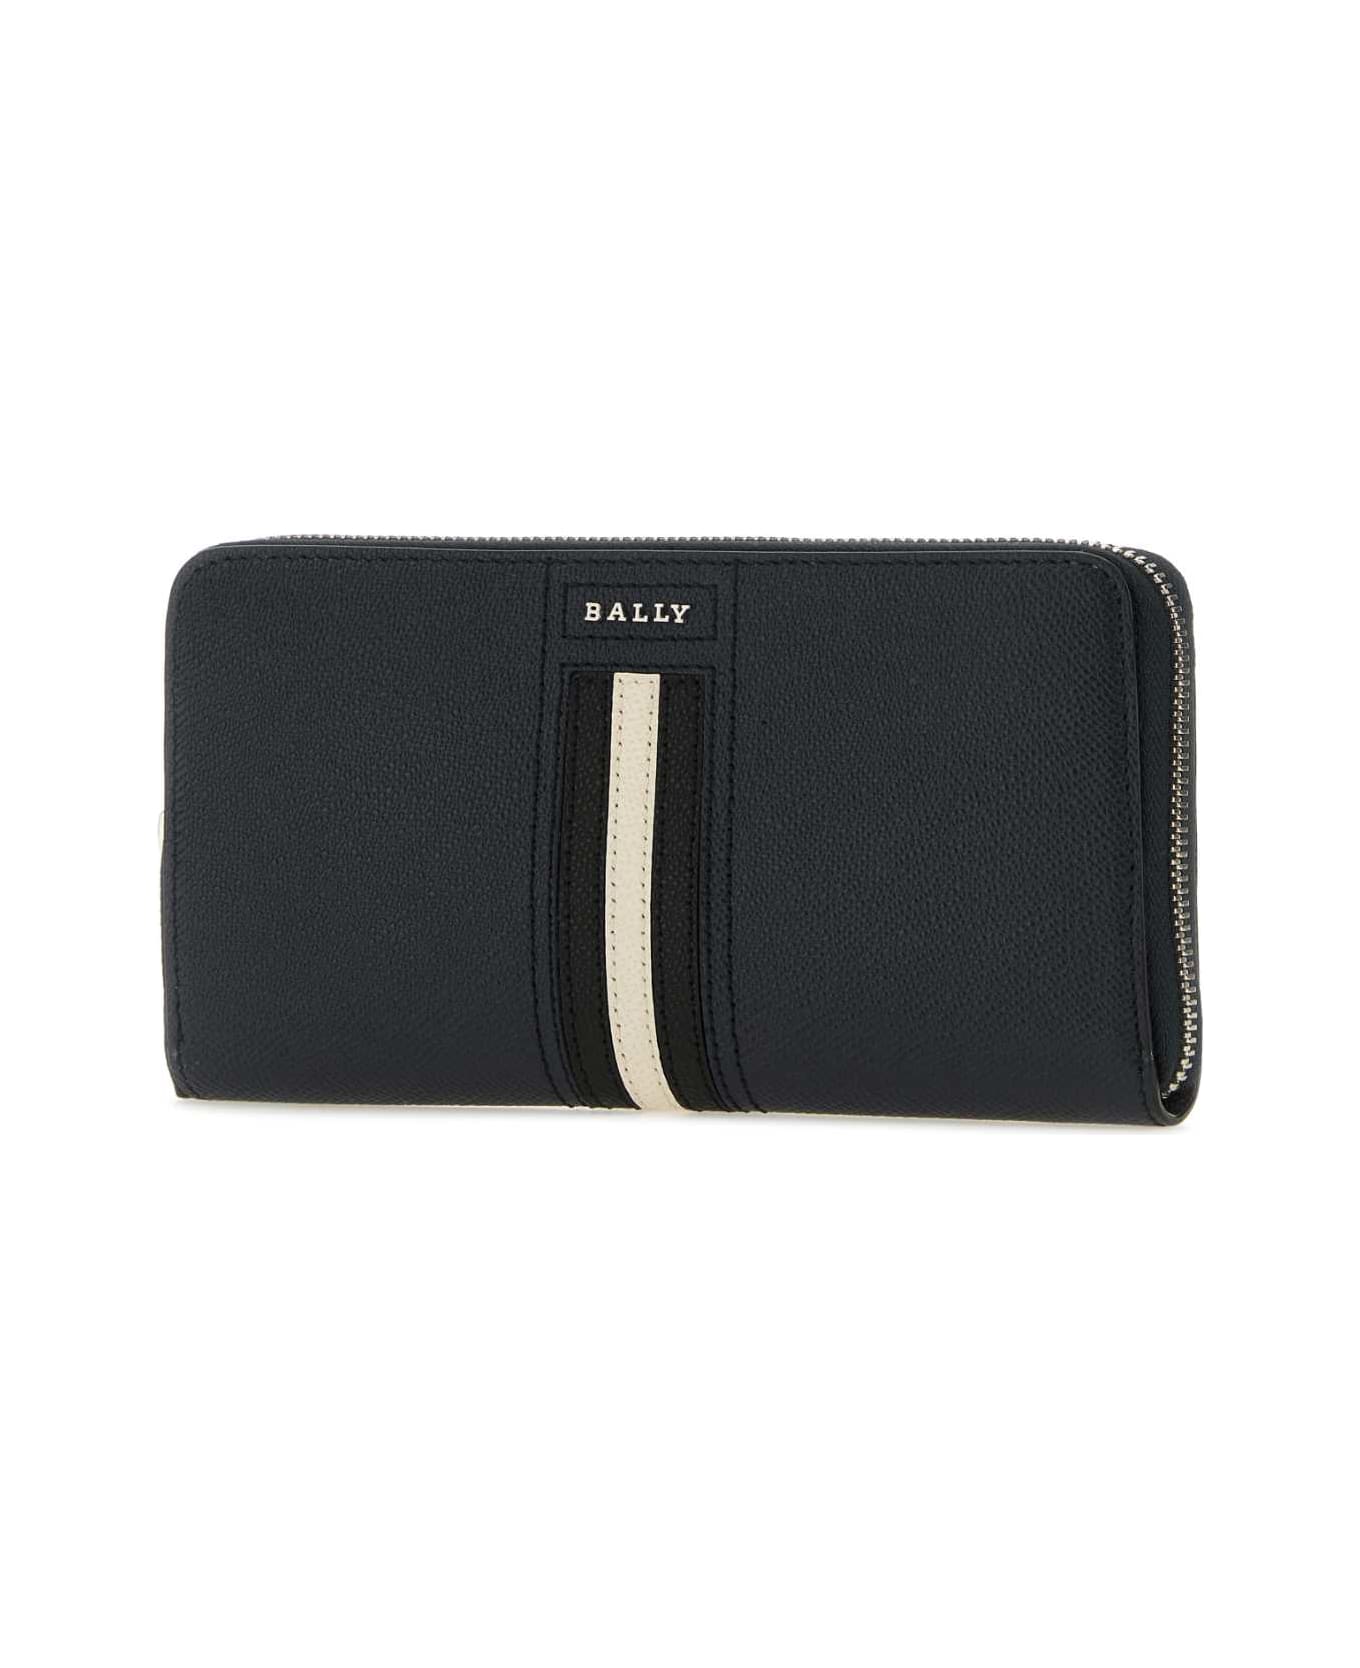 Bally Midnight Blue Leather Wallet - NEWBLUE 財布